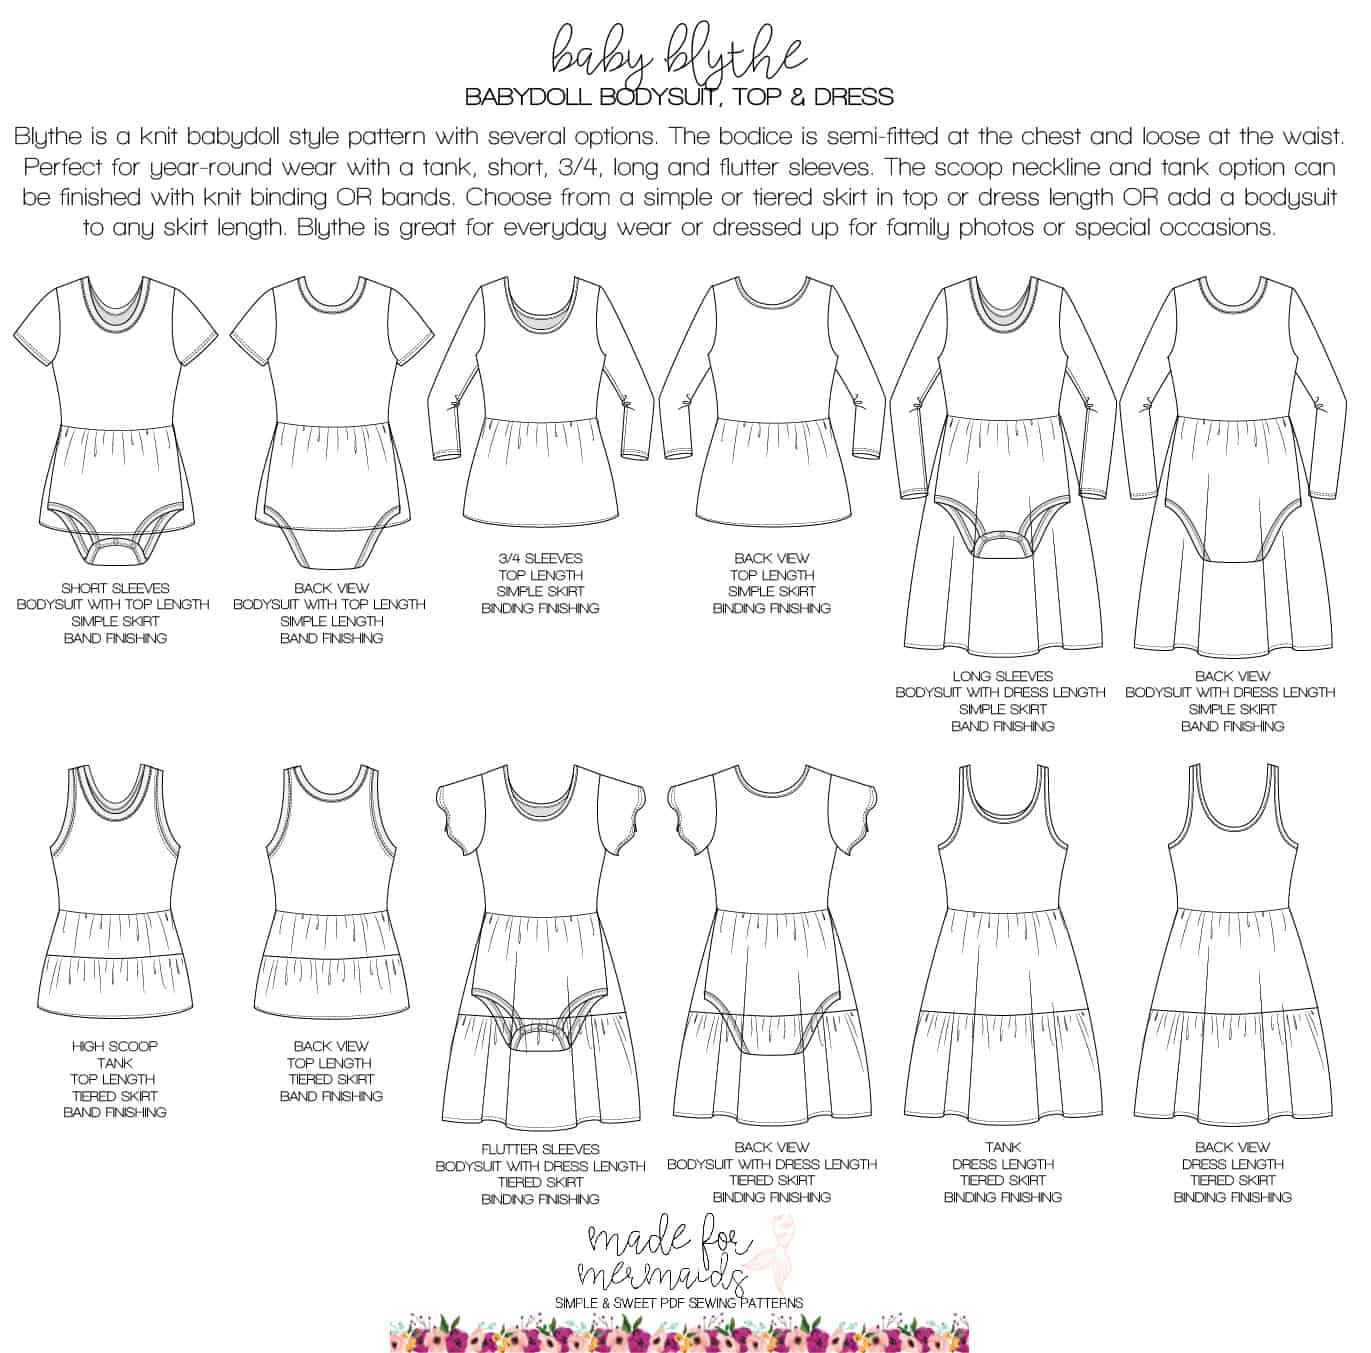 Baby Blythe Bodysuit, Top & Dress